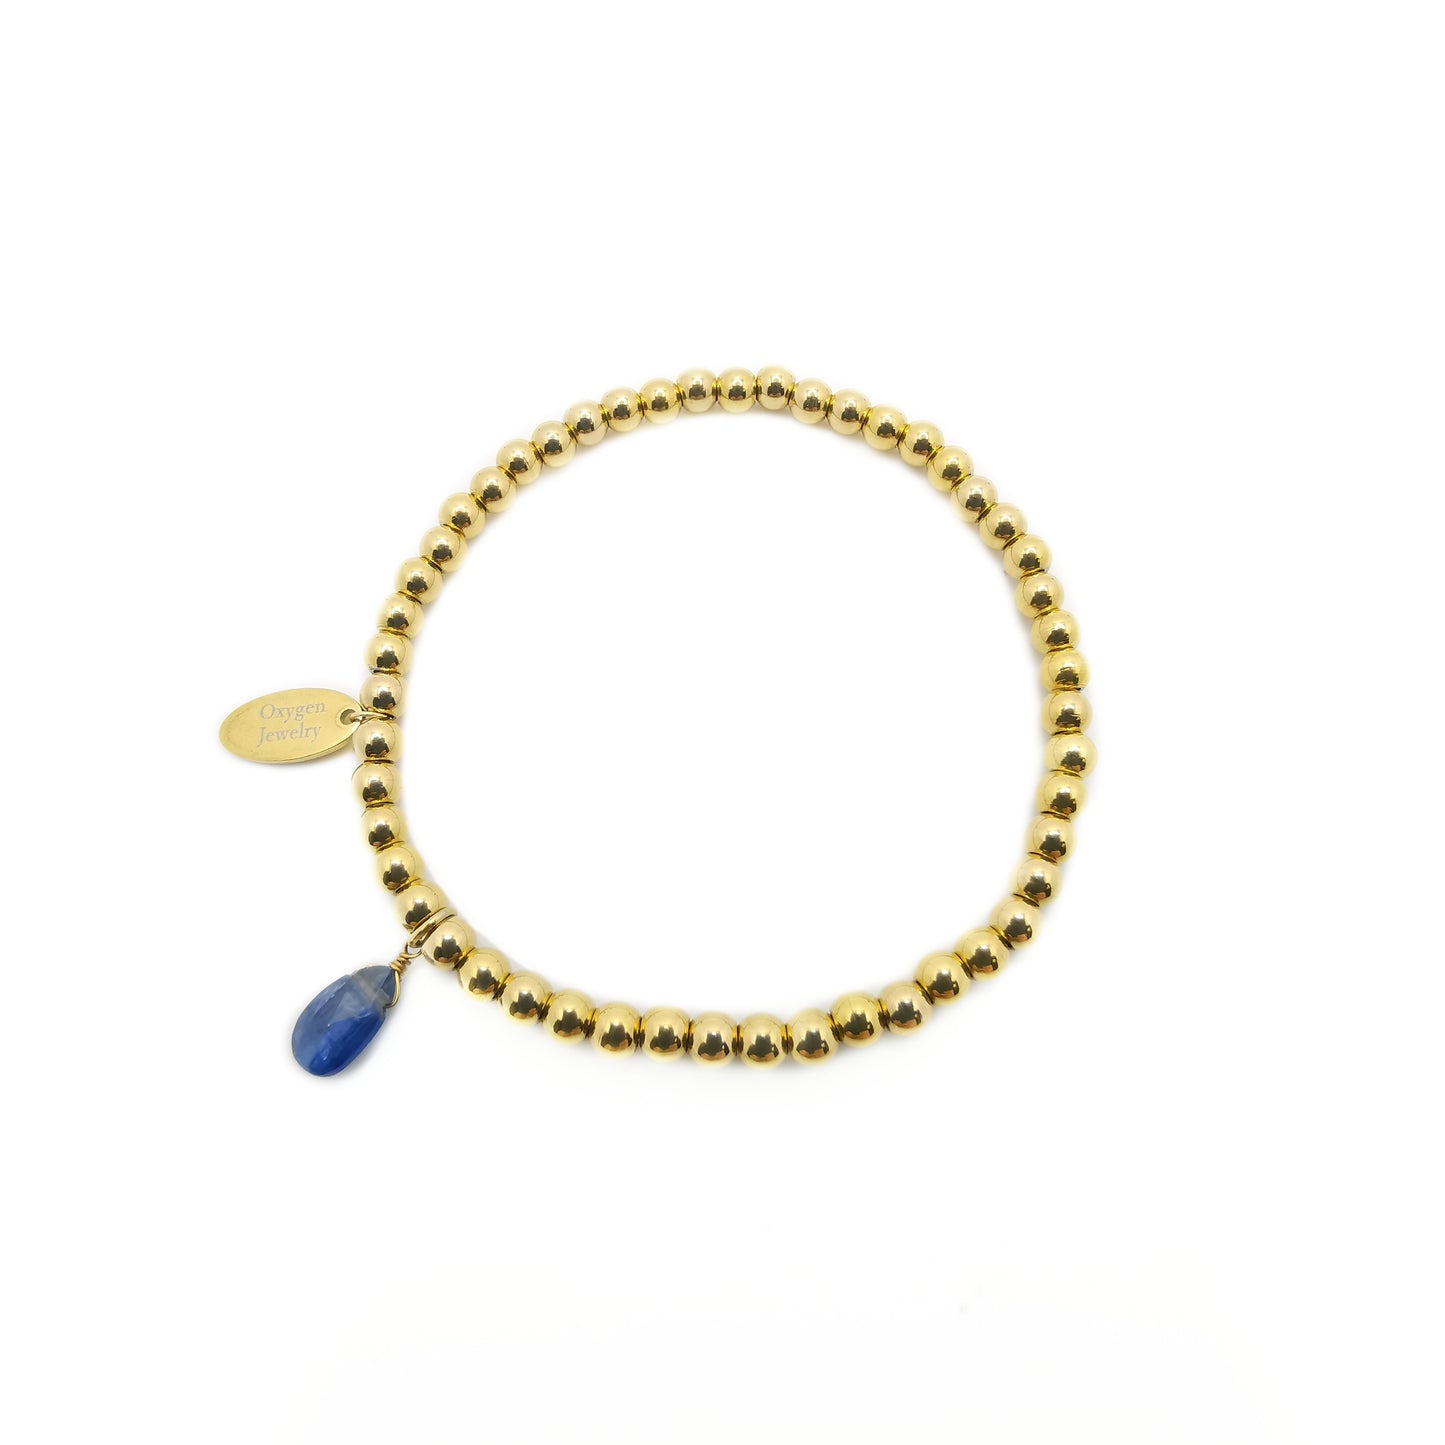 Kyanite Pear-Shaped Metal Bead Stretch Bracelet